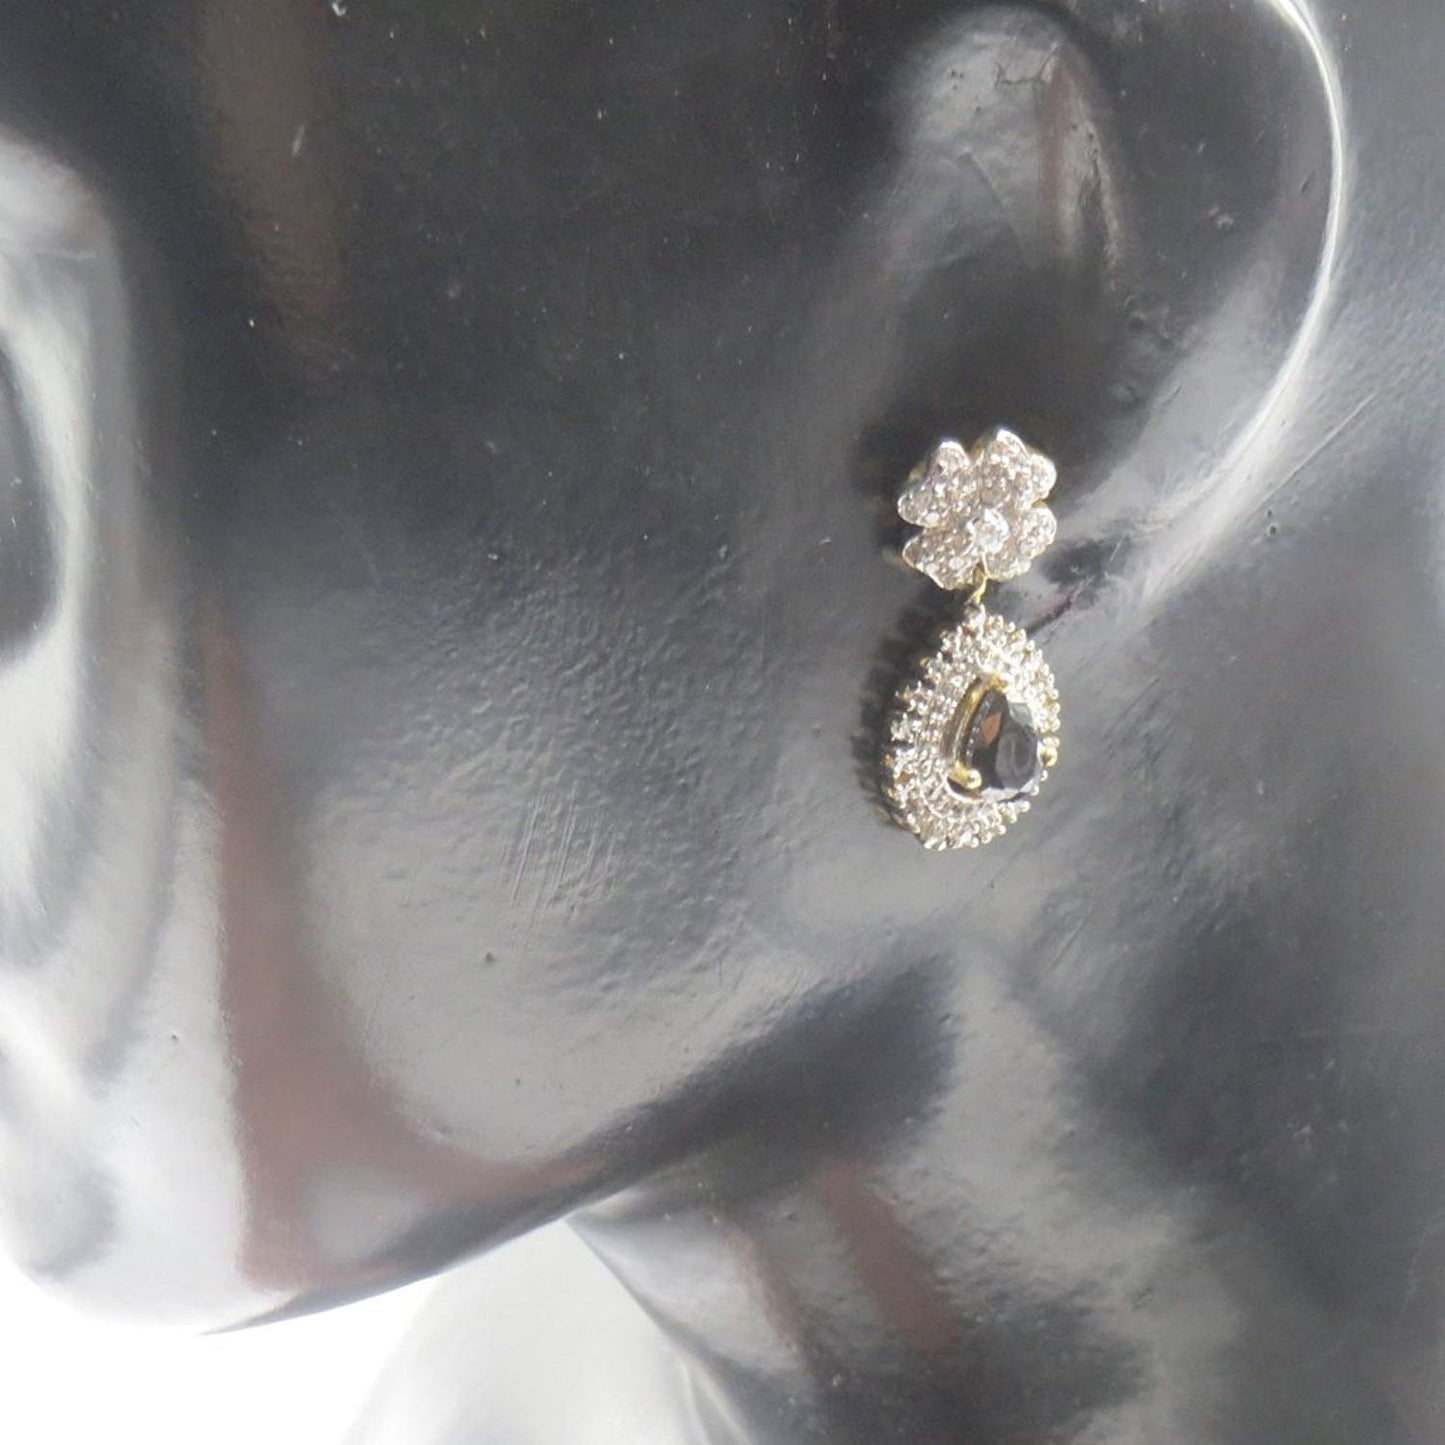 Jewelshingar Jewellery Silver Gold Plated Black Colour Earrings For Women (44781-ead)